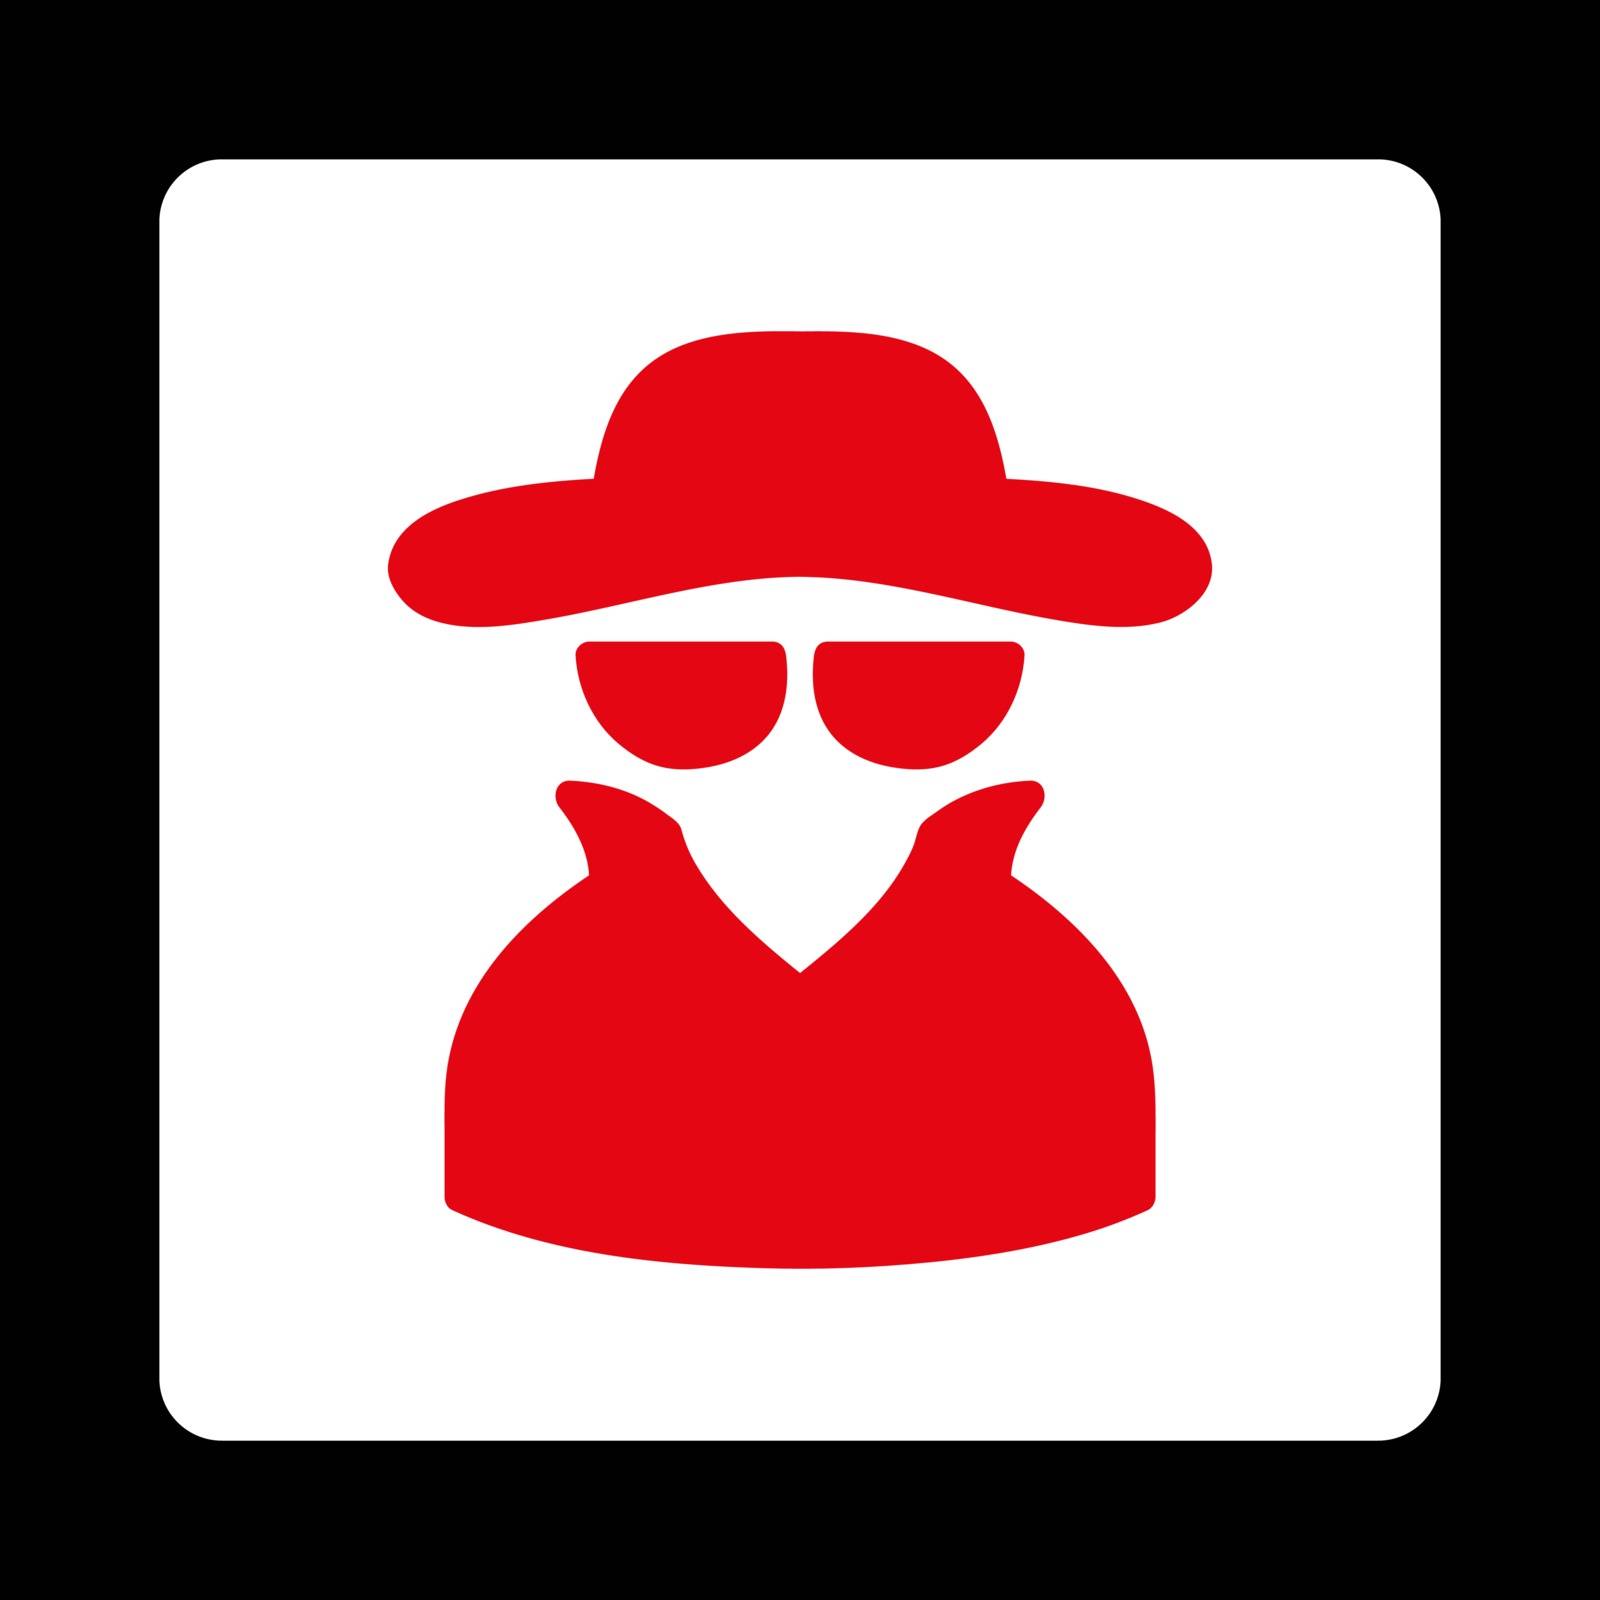 Spy icon by ahasoft